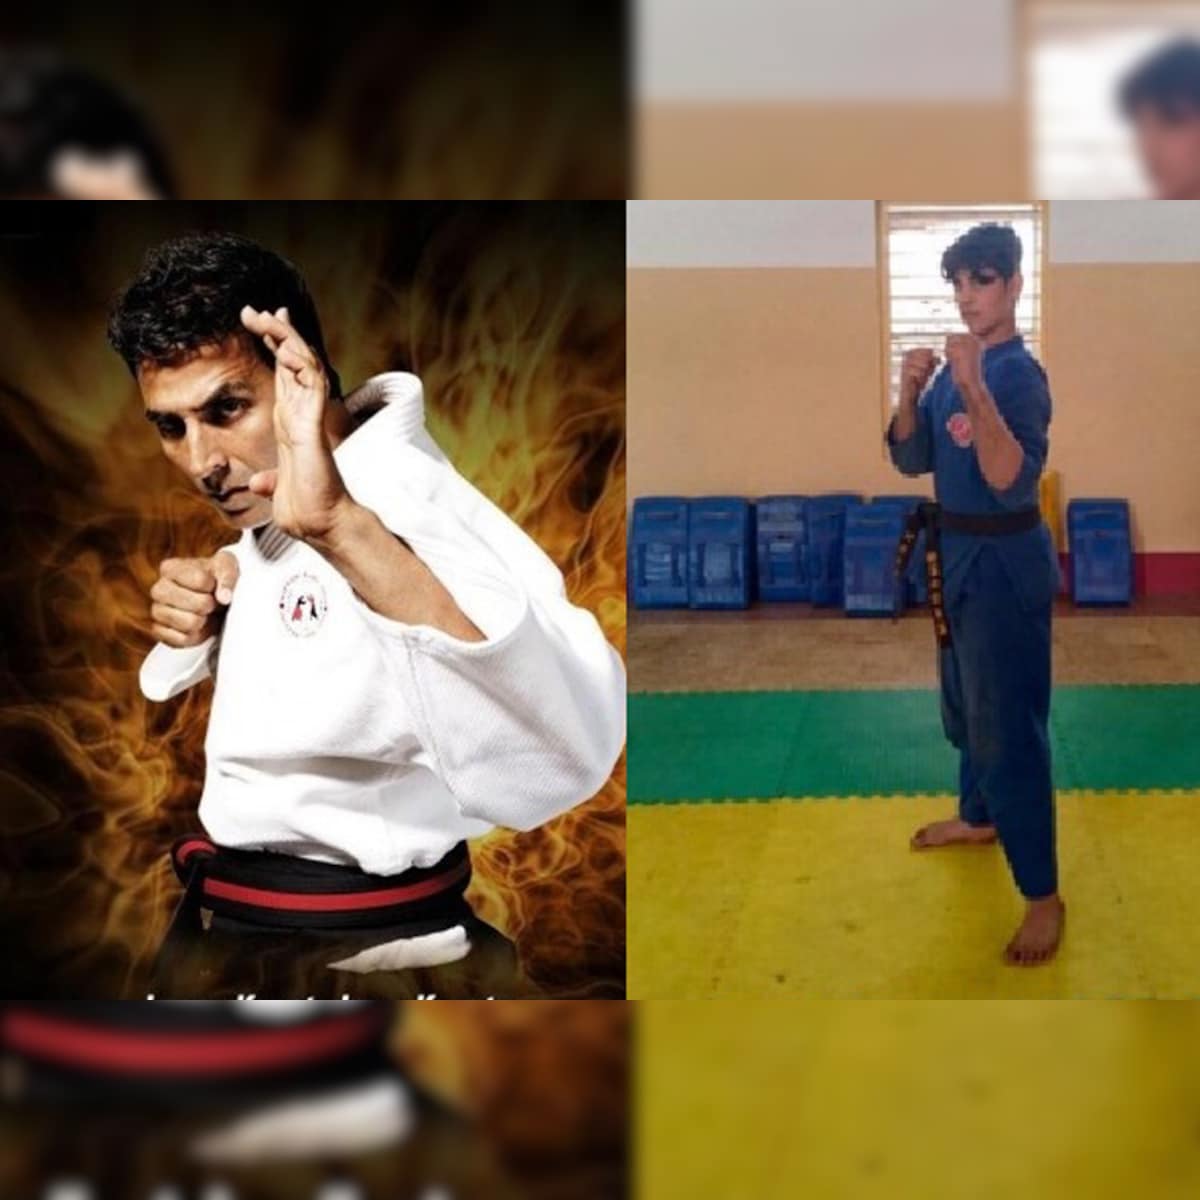 Black Belt Holder in Taekwondo - Strange Facts About Akshay Kumar